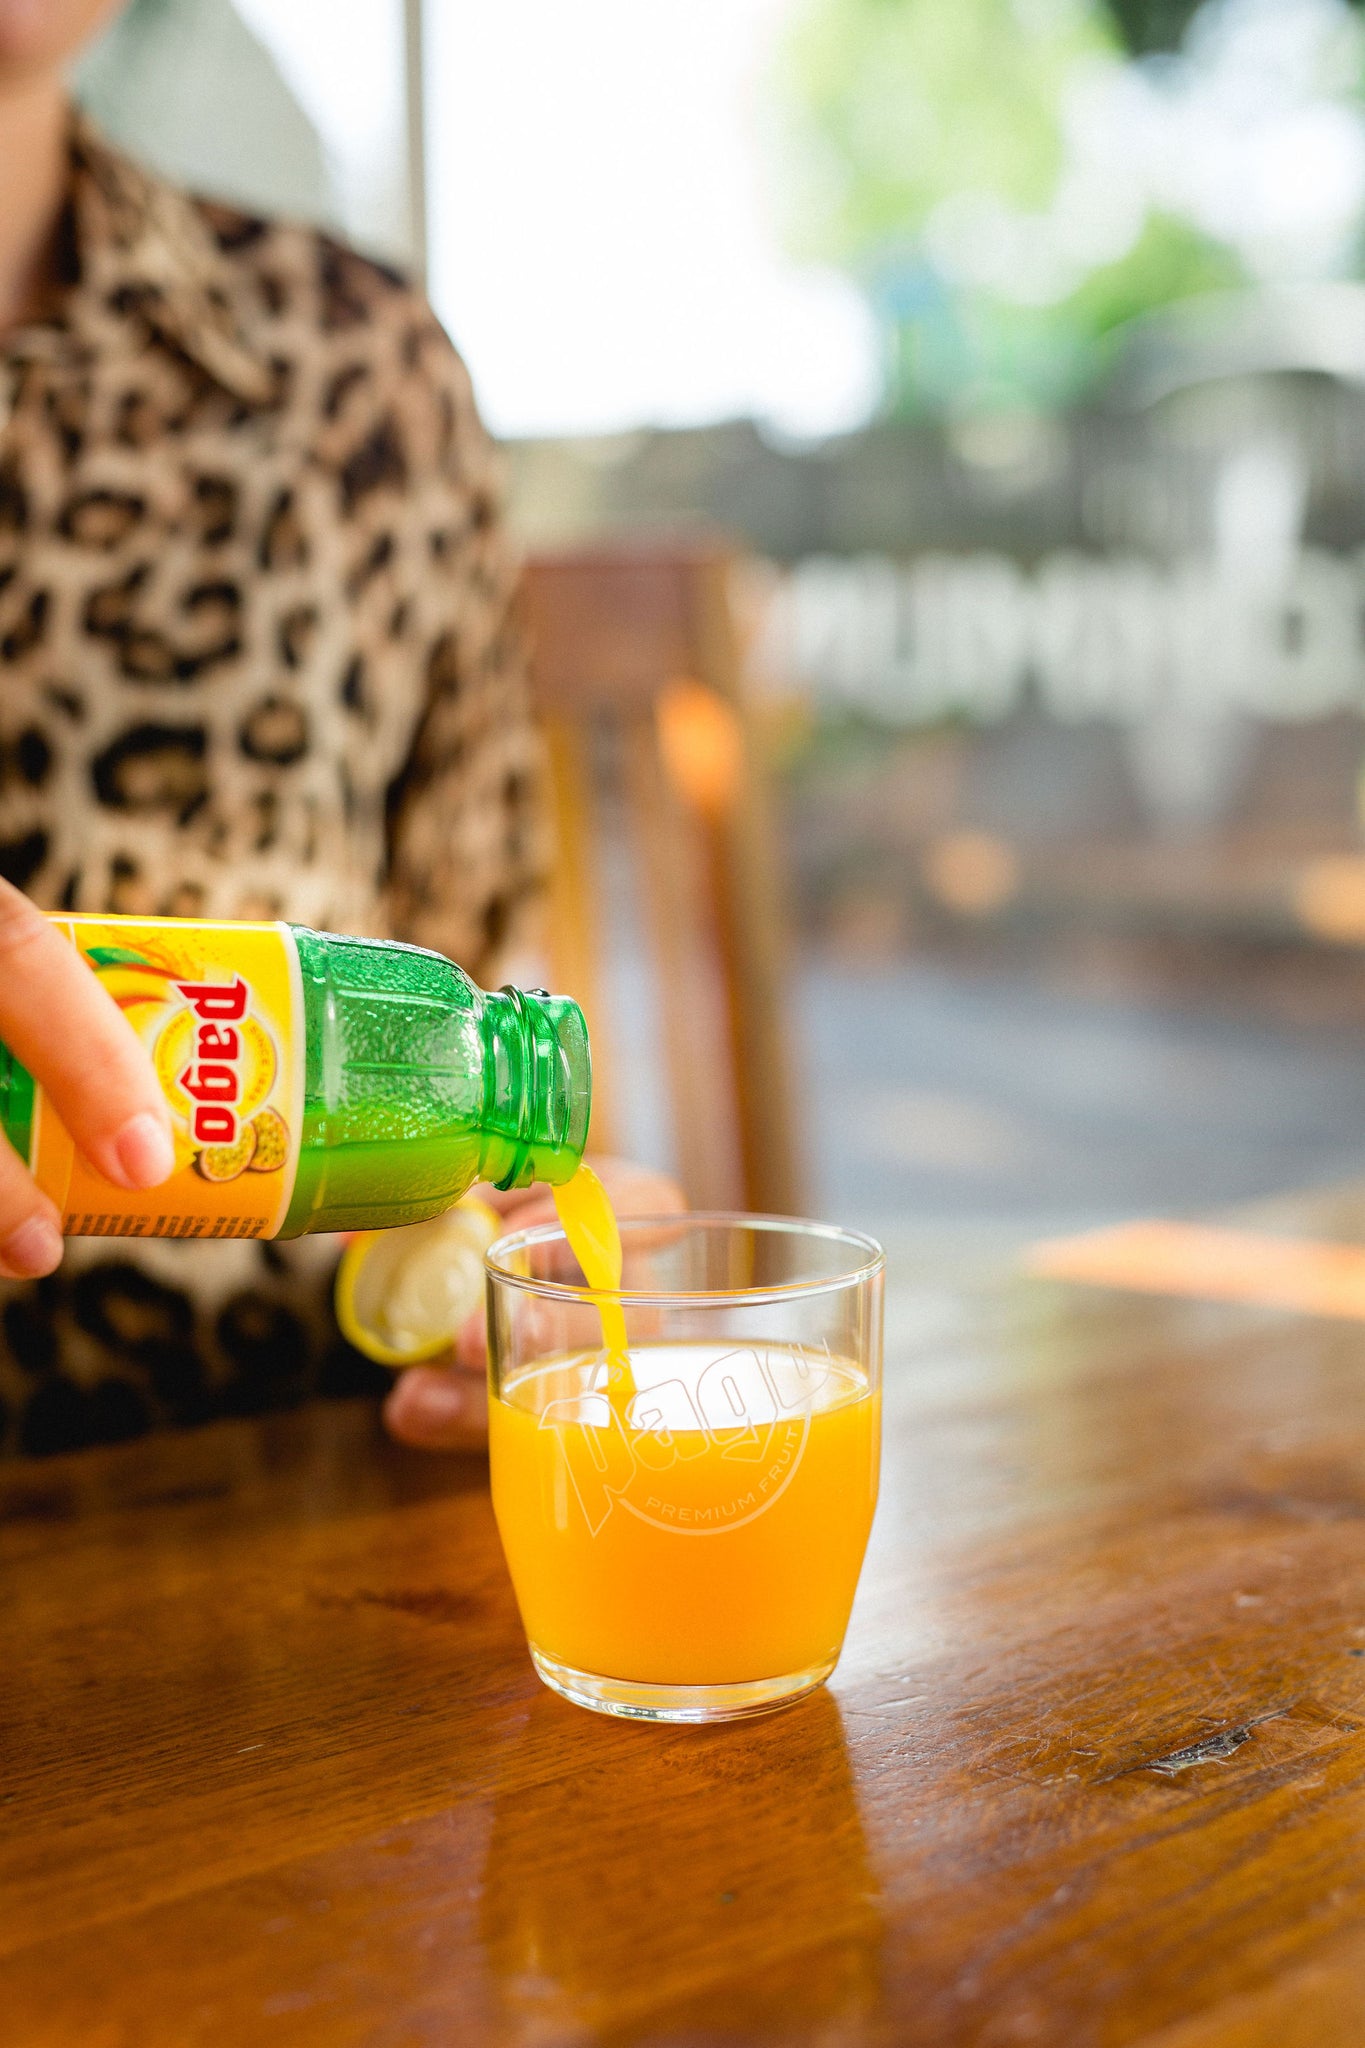 Pago Mango Juice (Single Bottle) - Pago Premium Fruit Juice Store